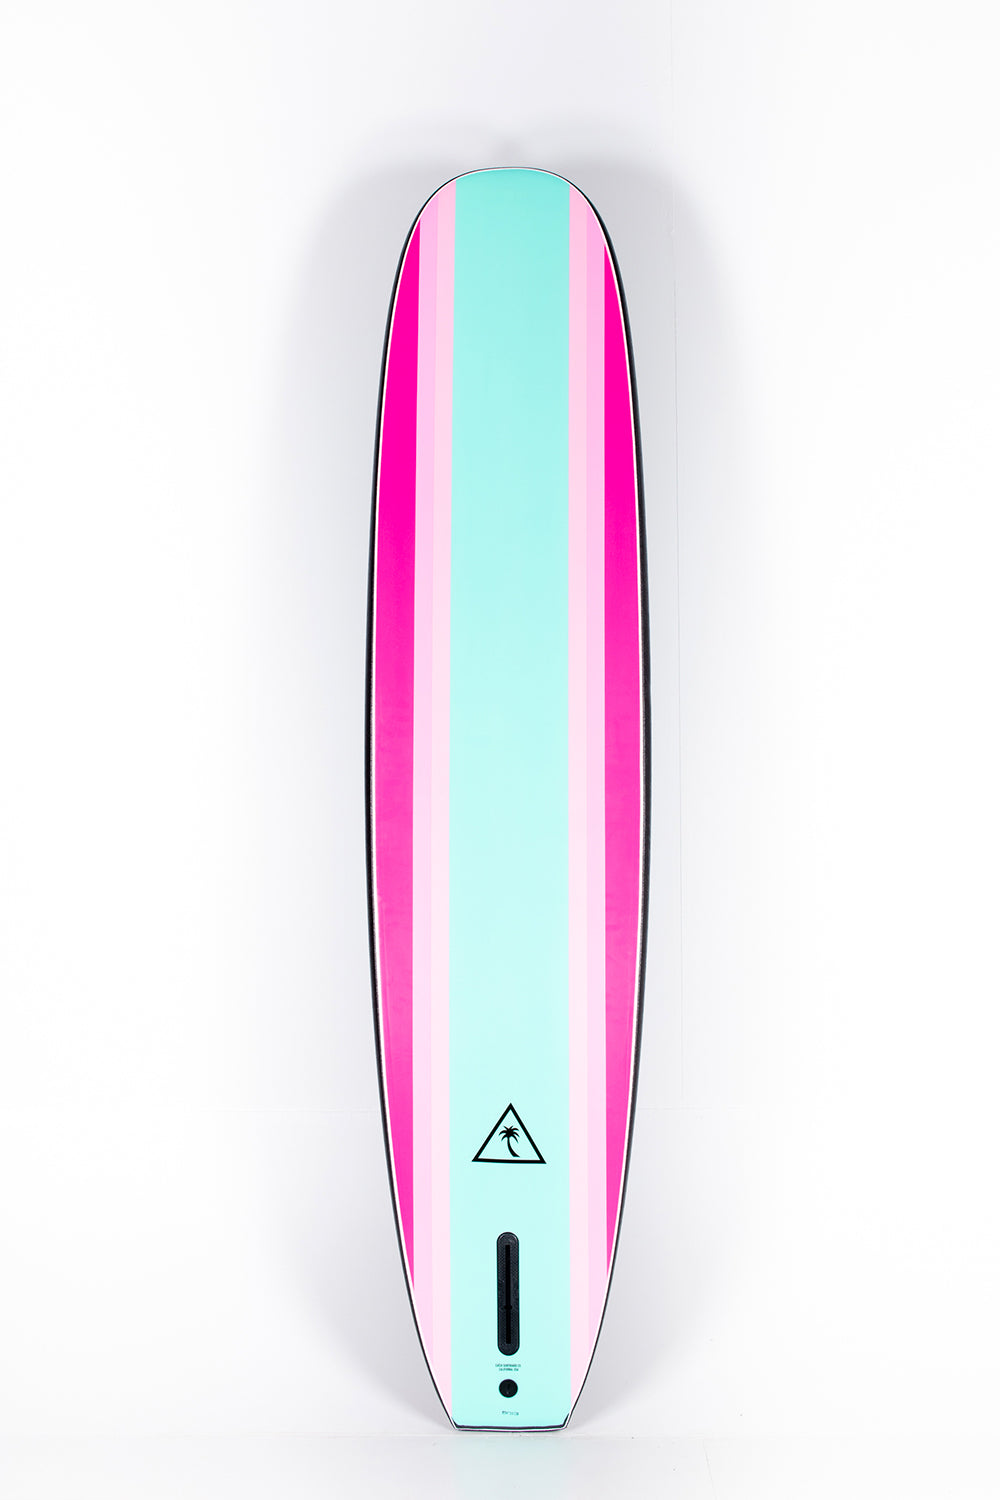 Pukas Surf Shop - Catch Surf - NOSERIDER SINGLE FIN Black Turquoise - 8'6" x 22,90" x 3,15" x 80l.